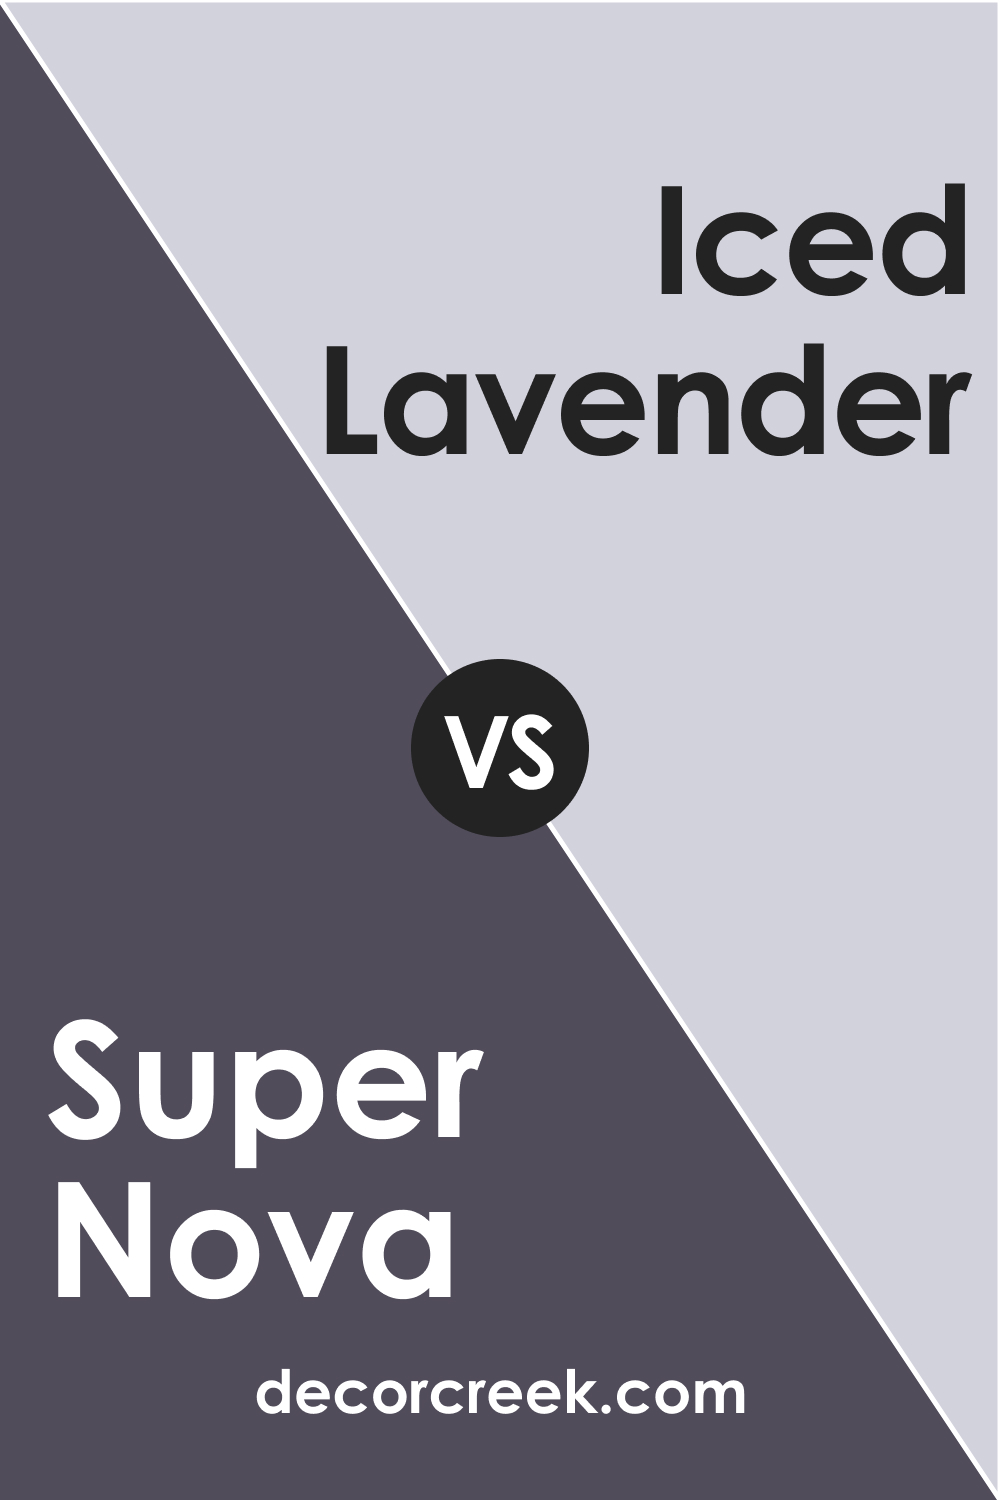 Super Nova 1414 vs. BM 1410 Iced Lavender